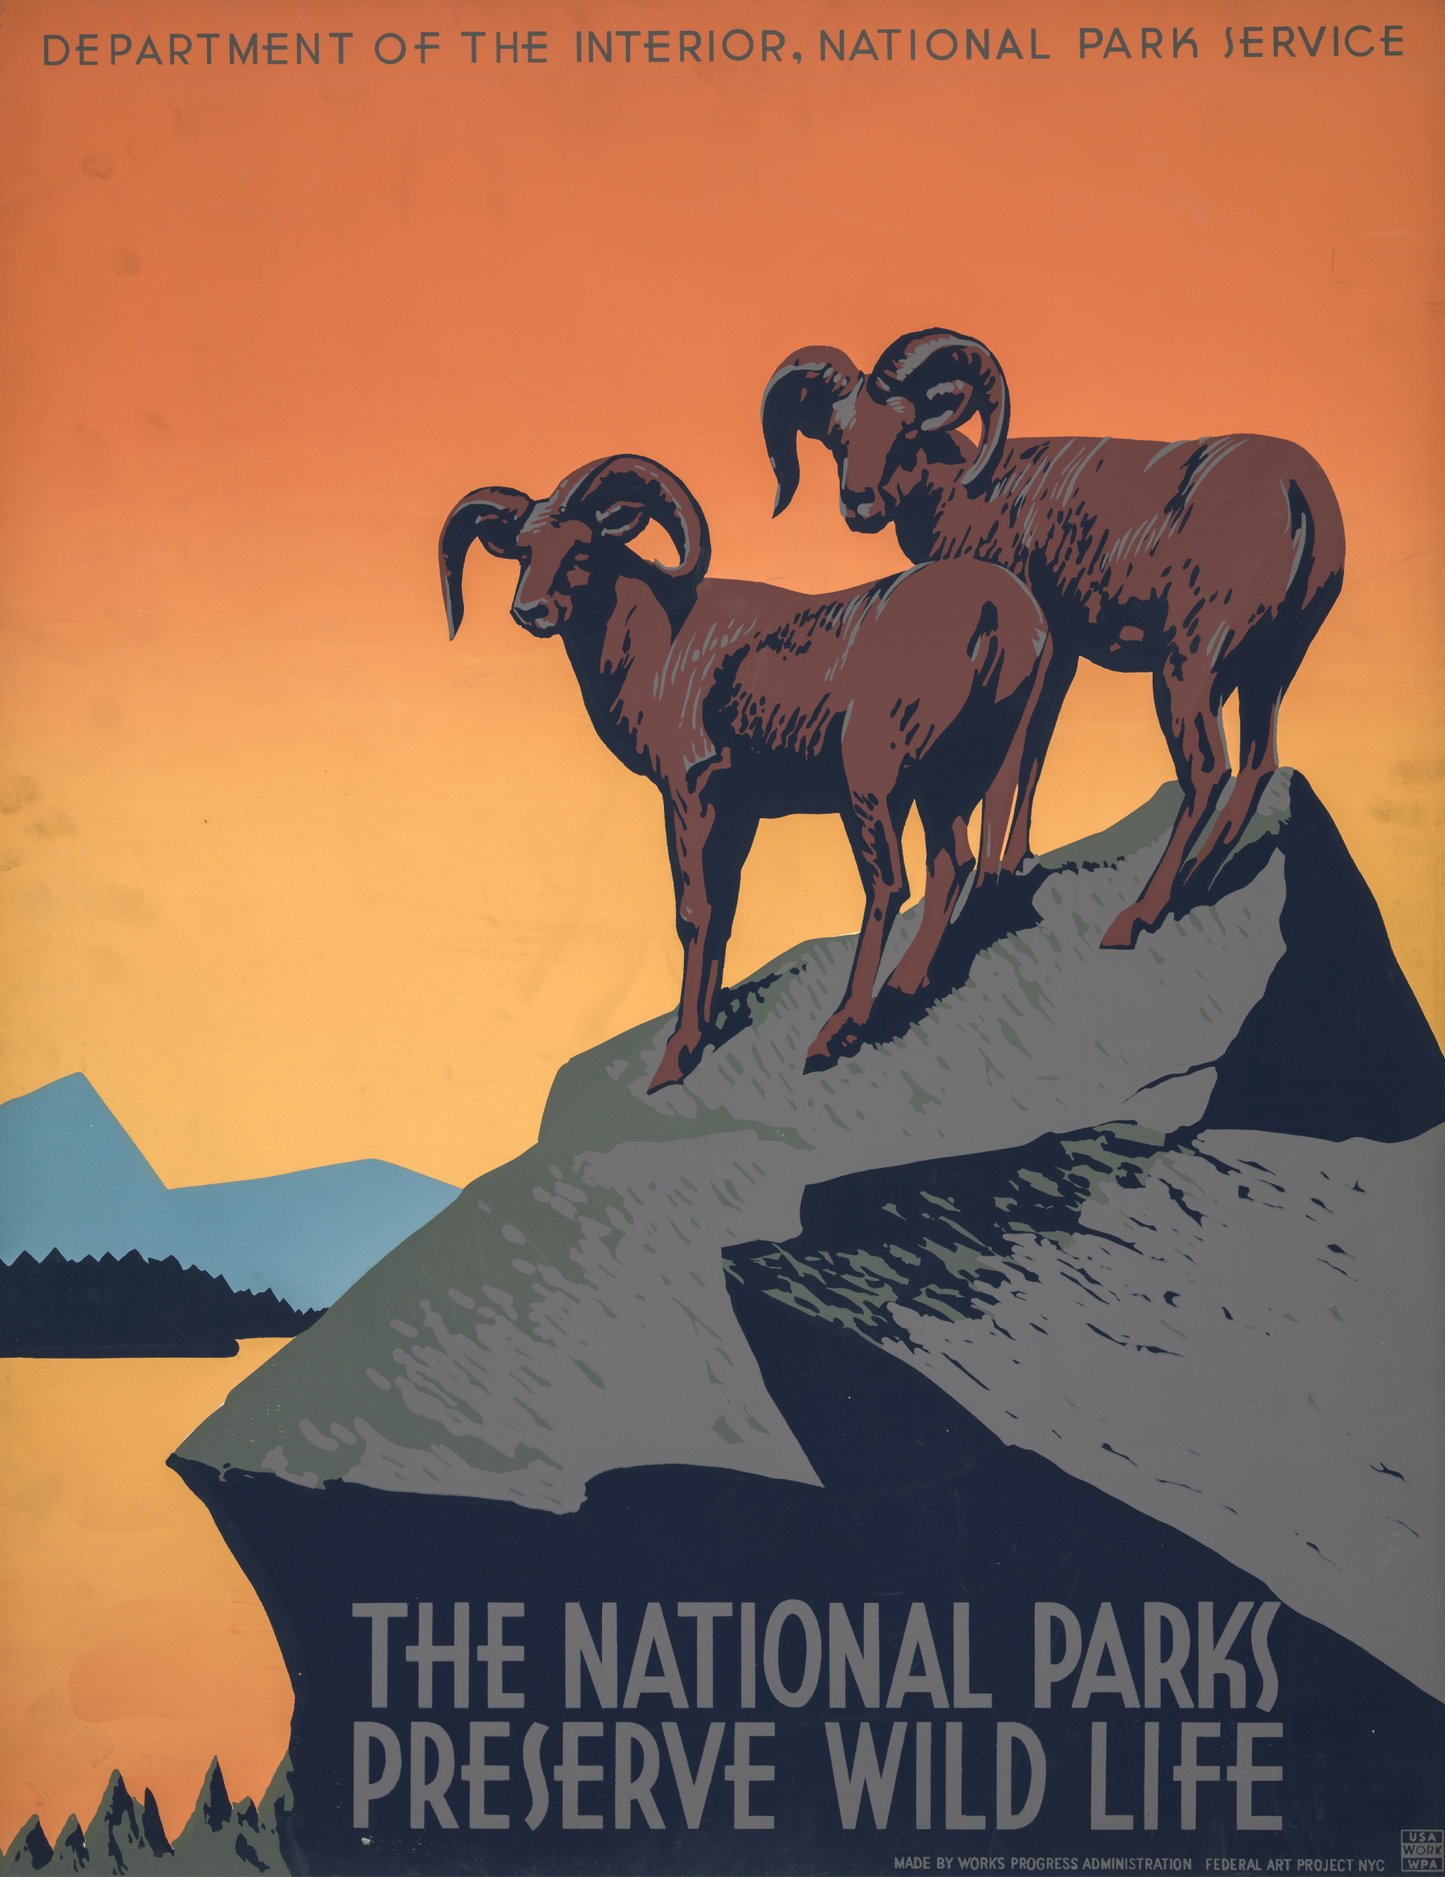 US National Parks Poster